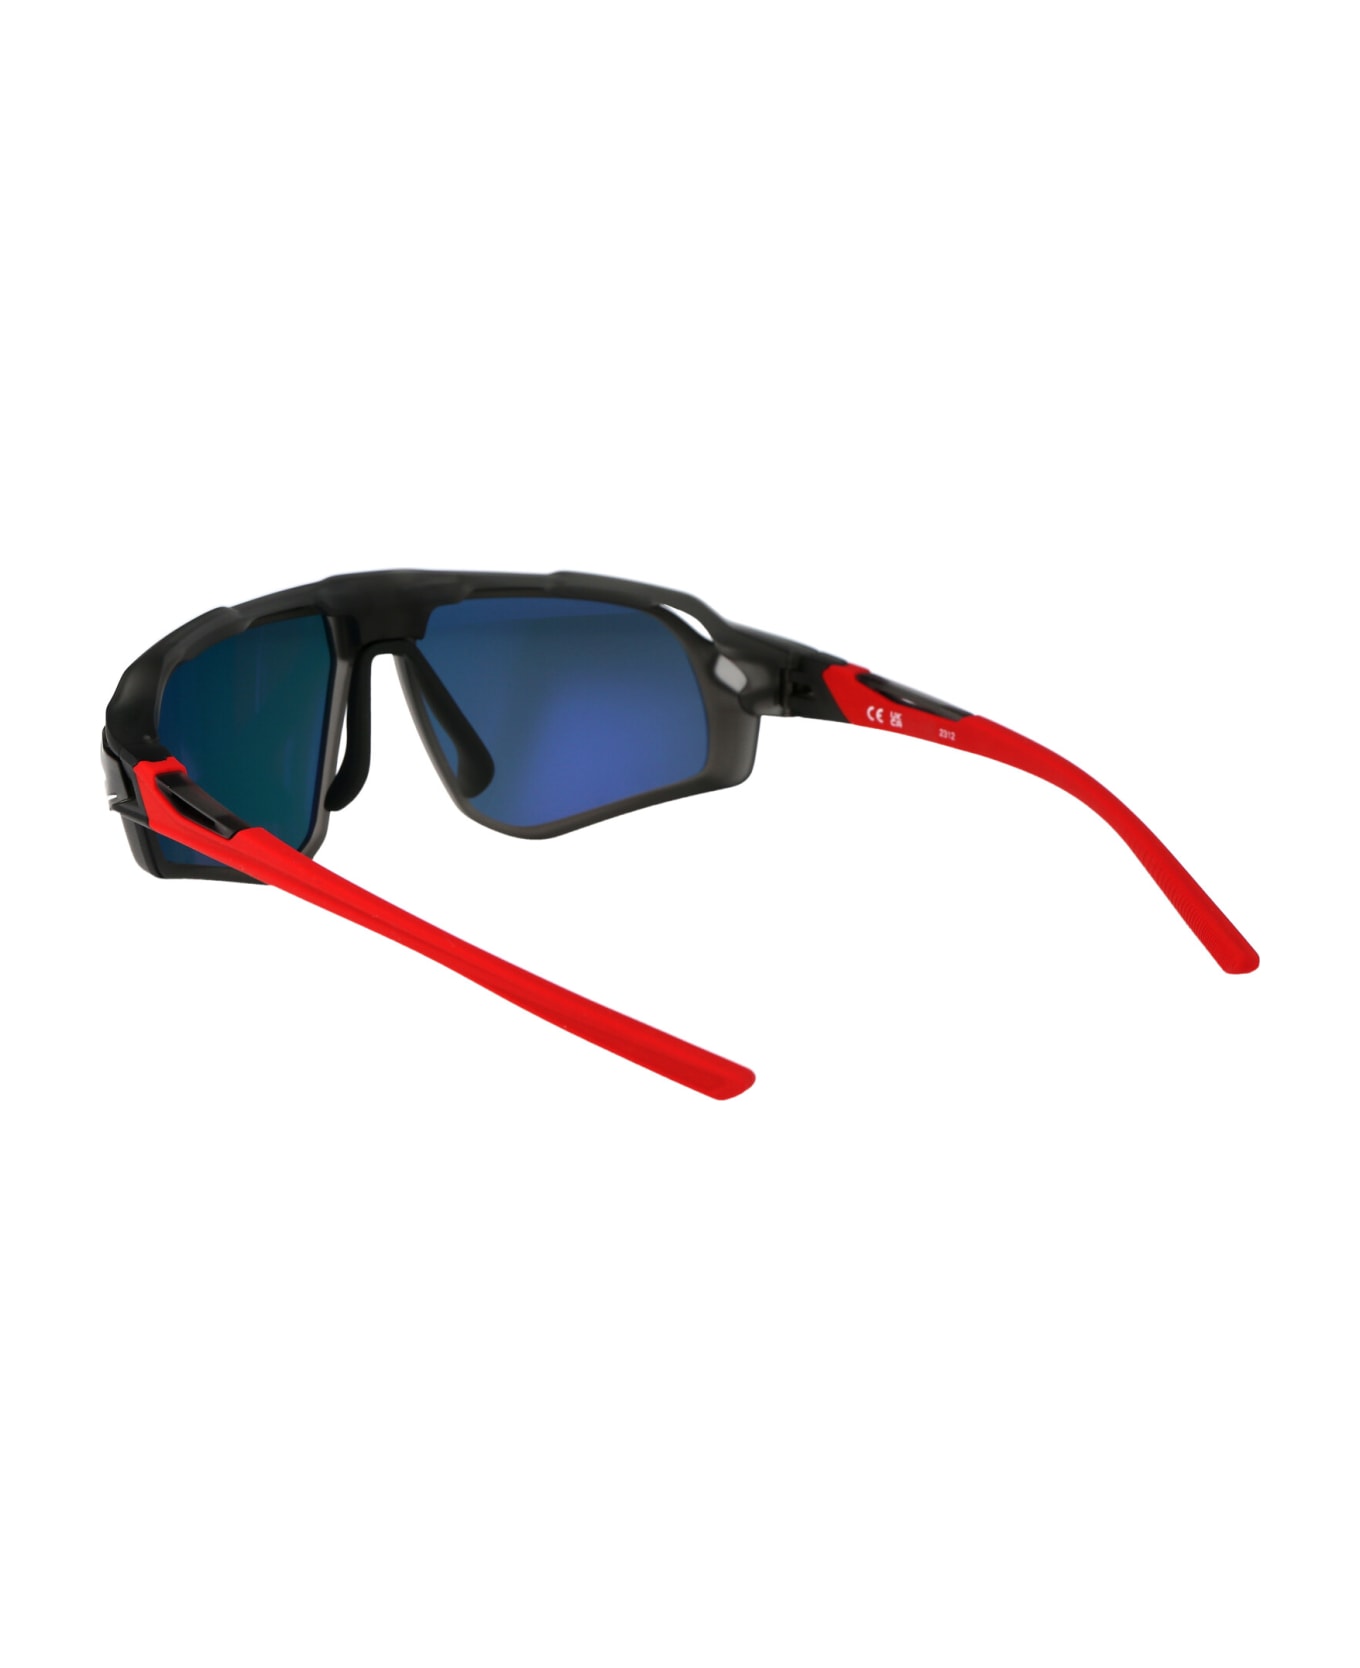 Nike Flyfree M Sunglasses - 060 GREY W/ RED MIRROR MATTE ANTHRACITE